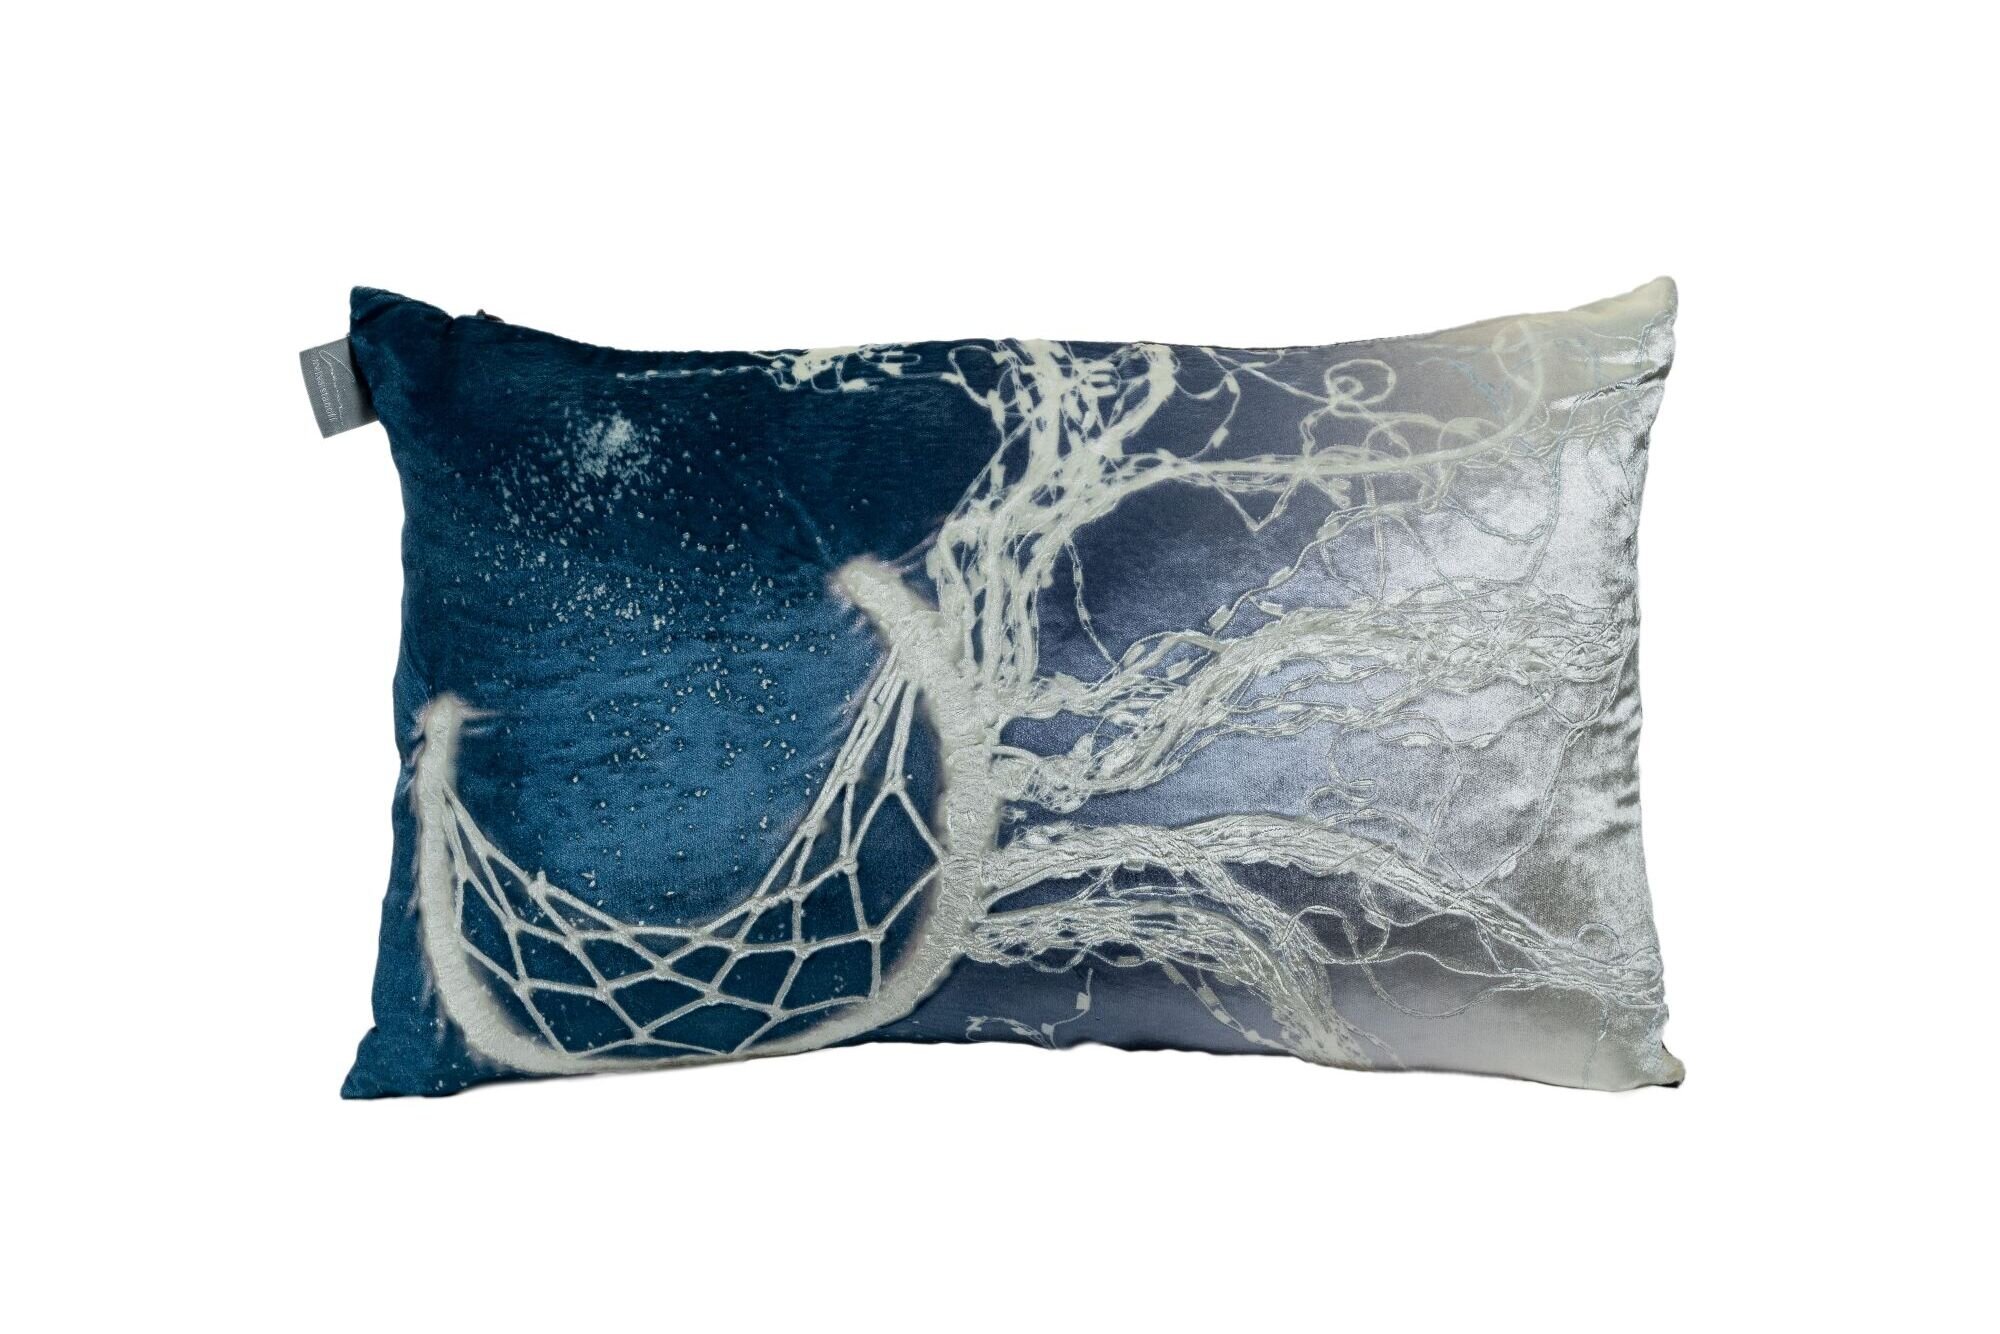 Pillow, Dream Catcher Collection, Aviva Stanoff Design. 